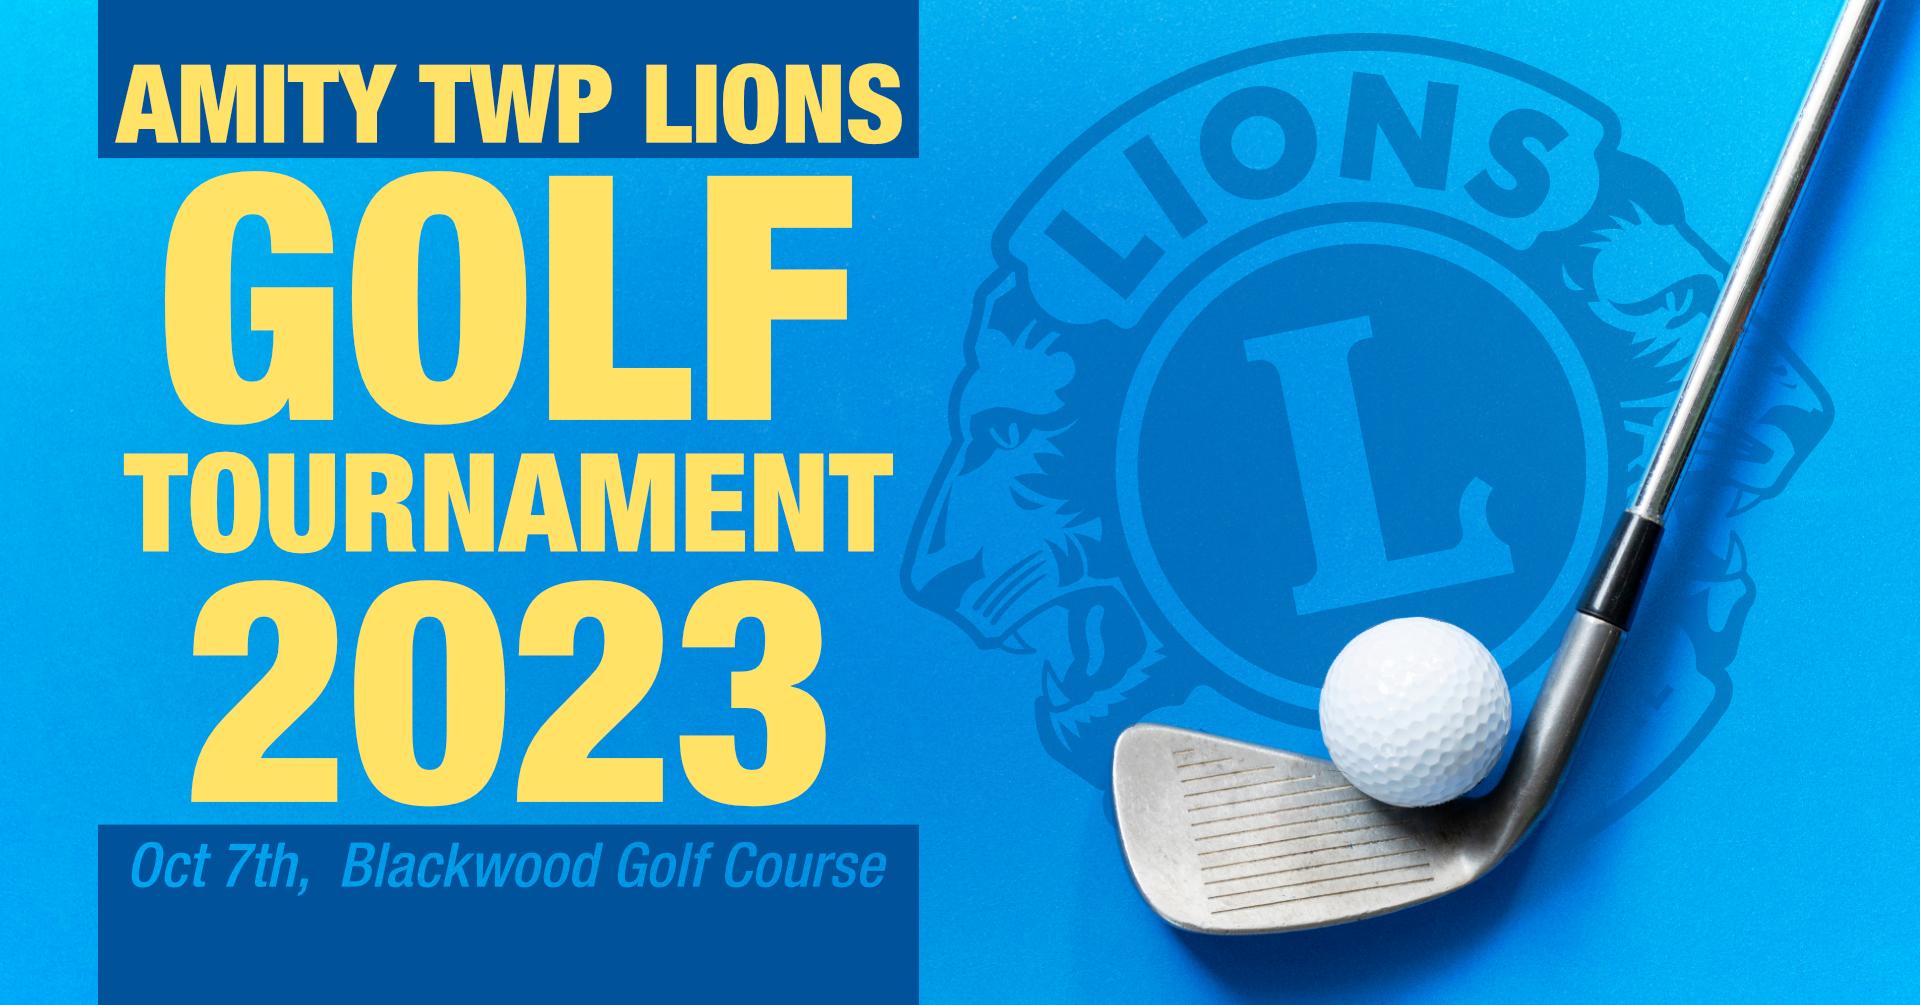 Lions Club 2023 Golf Tournament at Blackwood